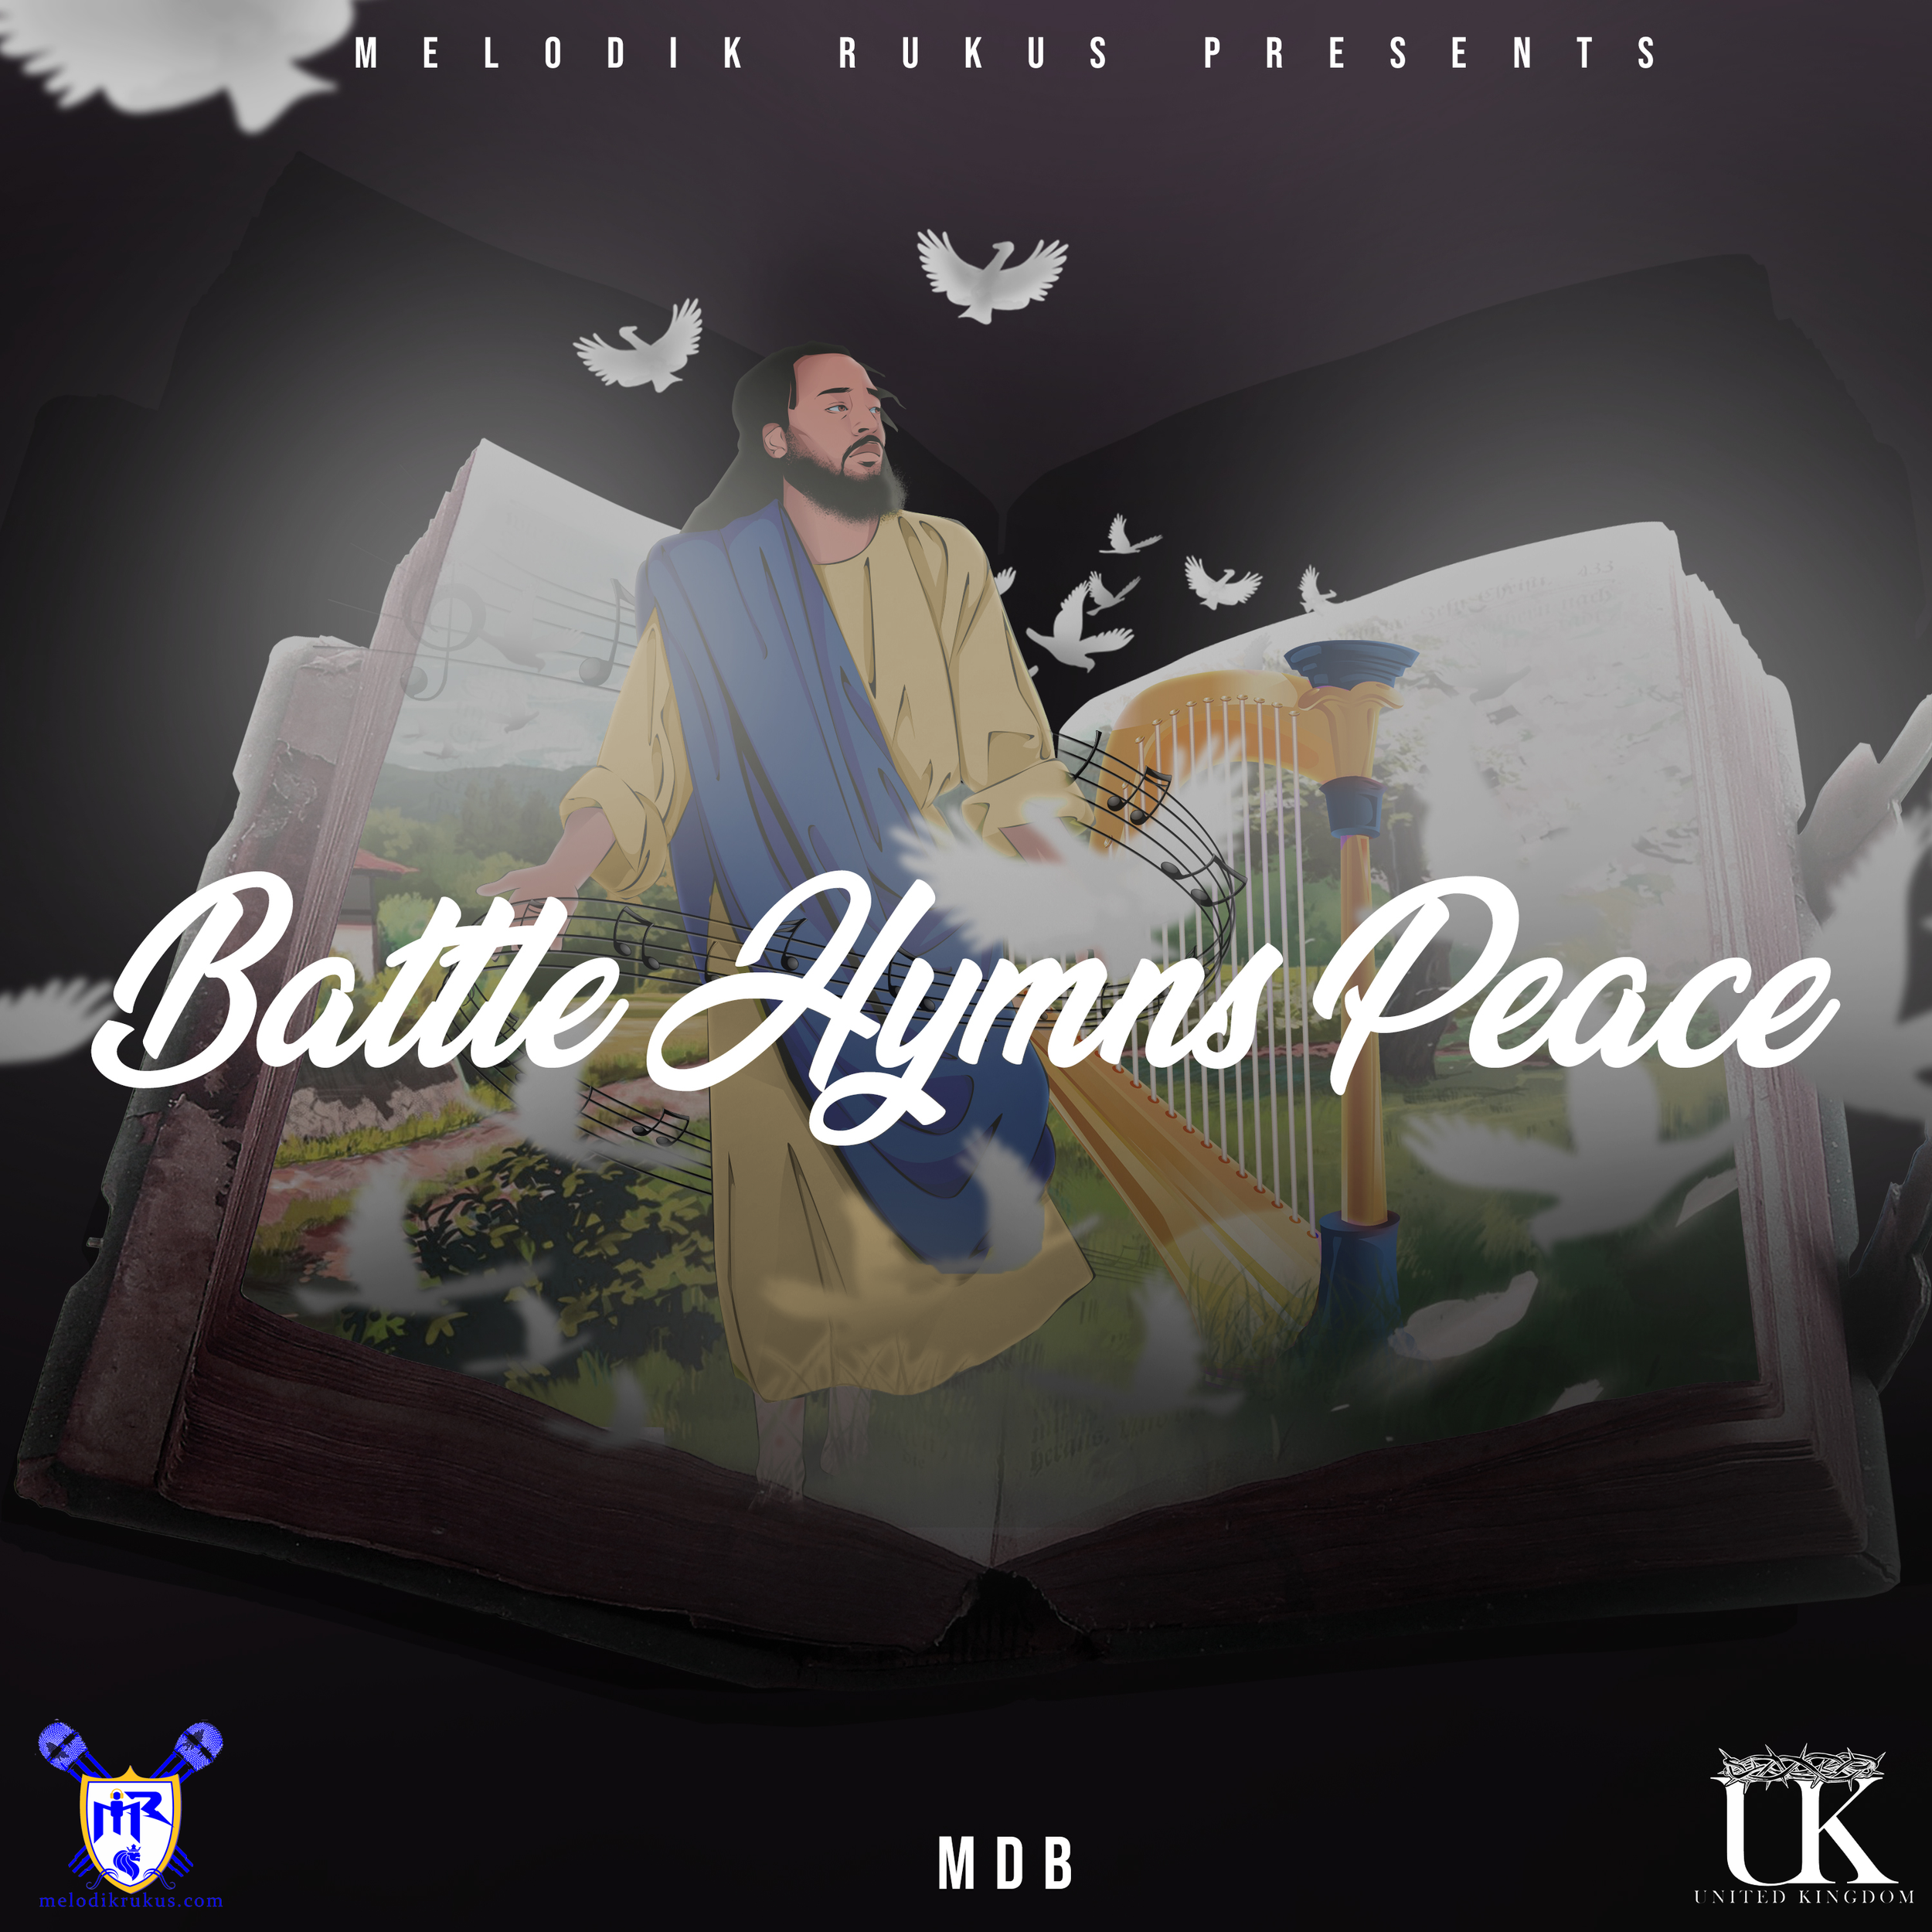 BATTLE HYMNS PEACE COVER ART .png